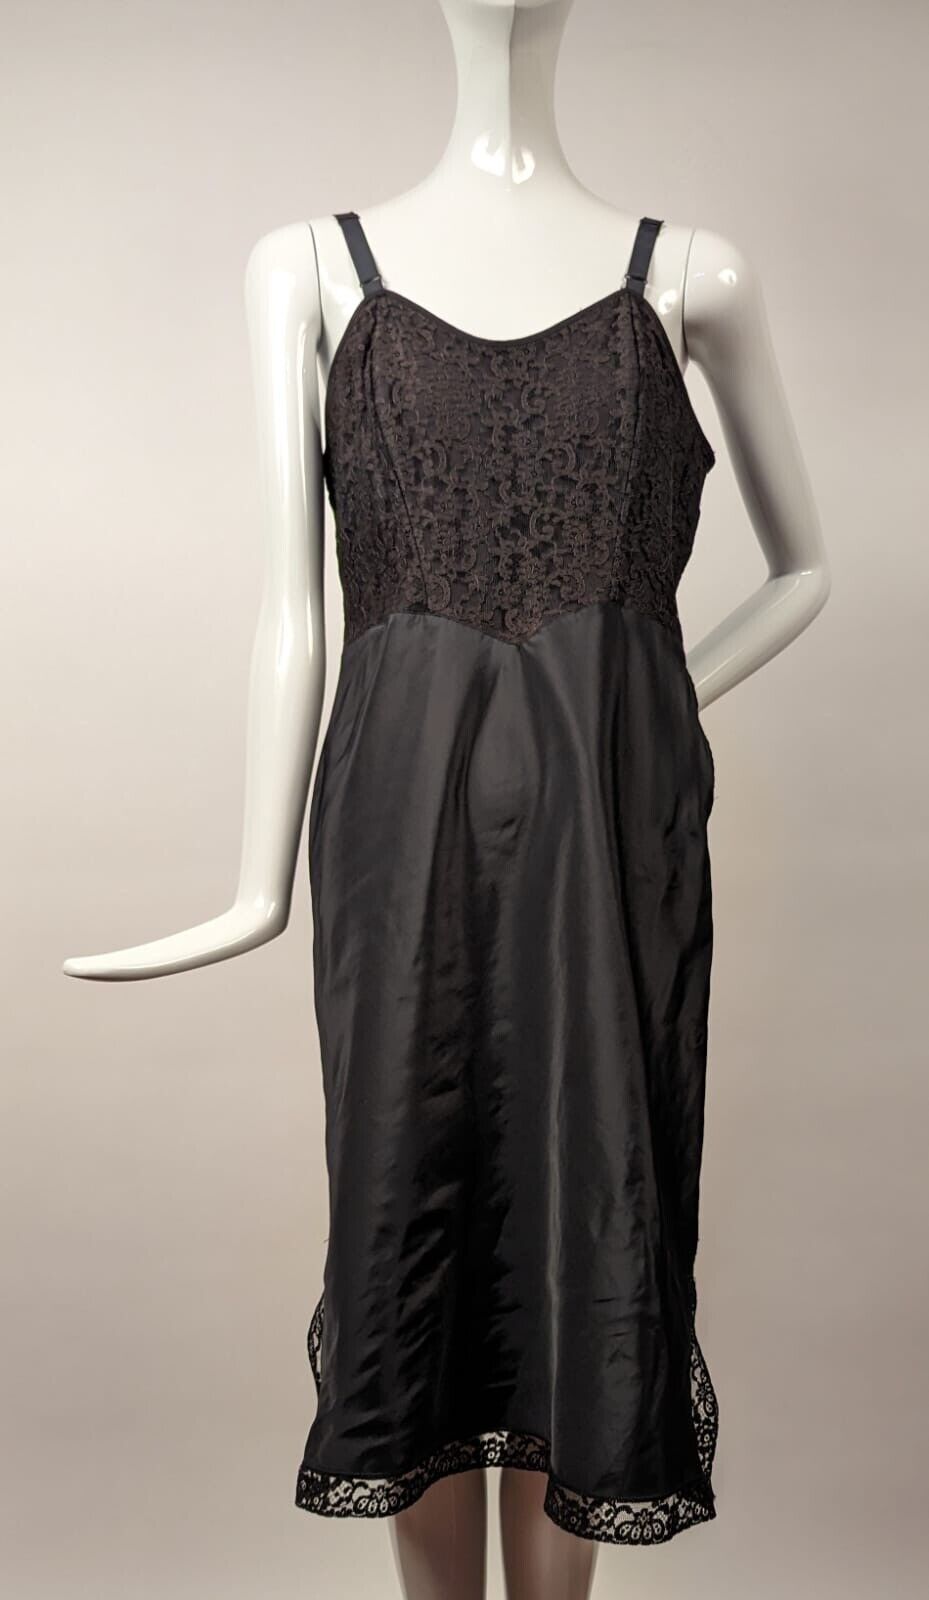 SAUCY BARBIZON VINTAGE 1950’S BLACK SLIP FOR DRESS - image 1